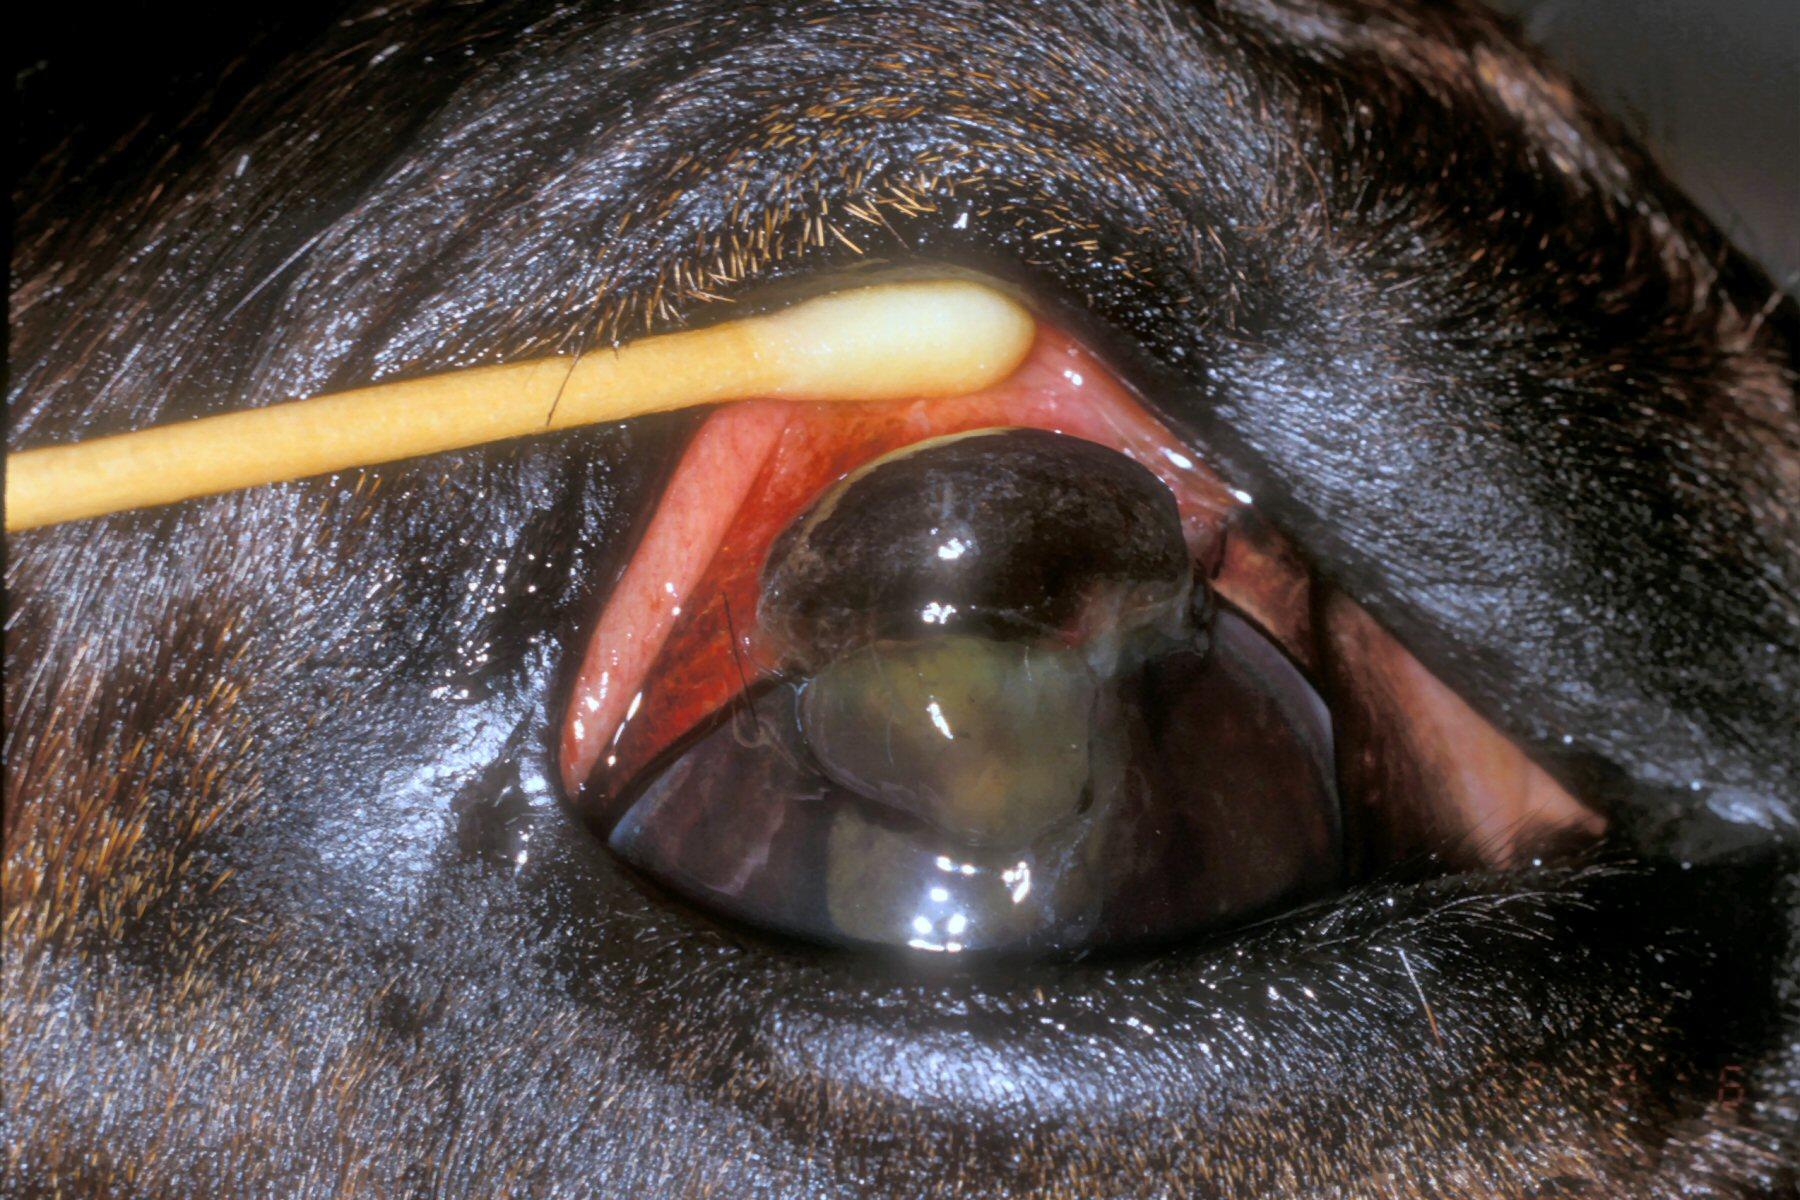 Corneal laceration with iris prolapse, horse